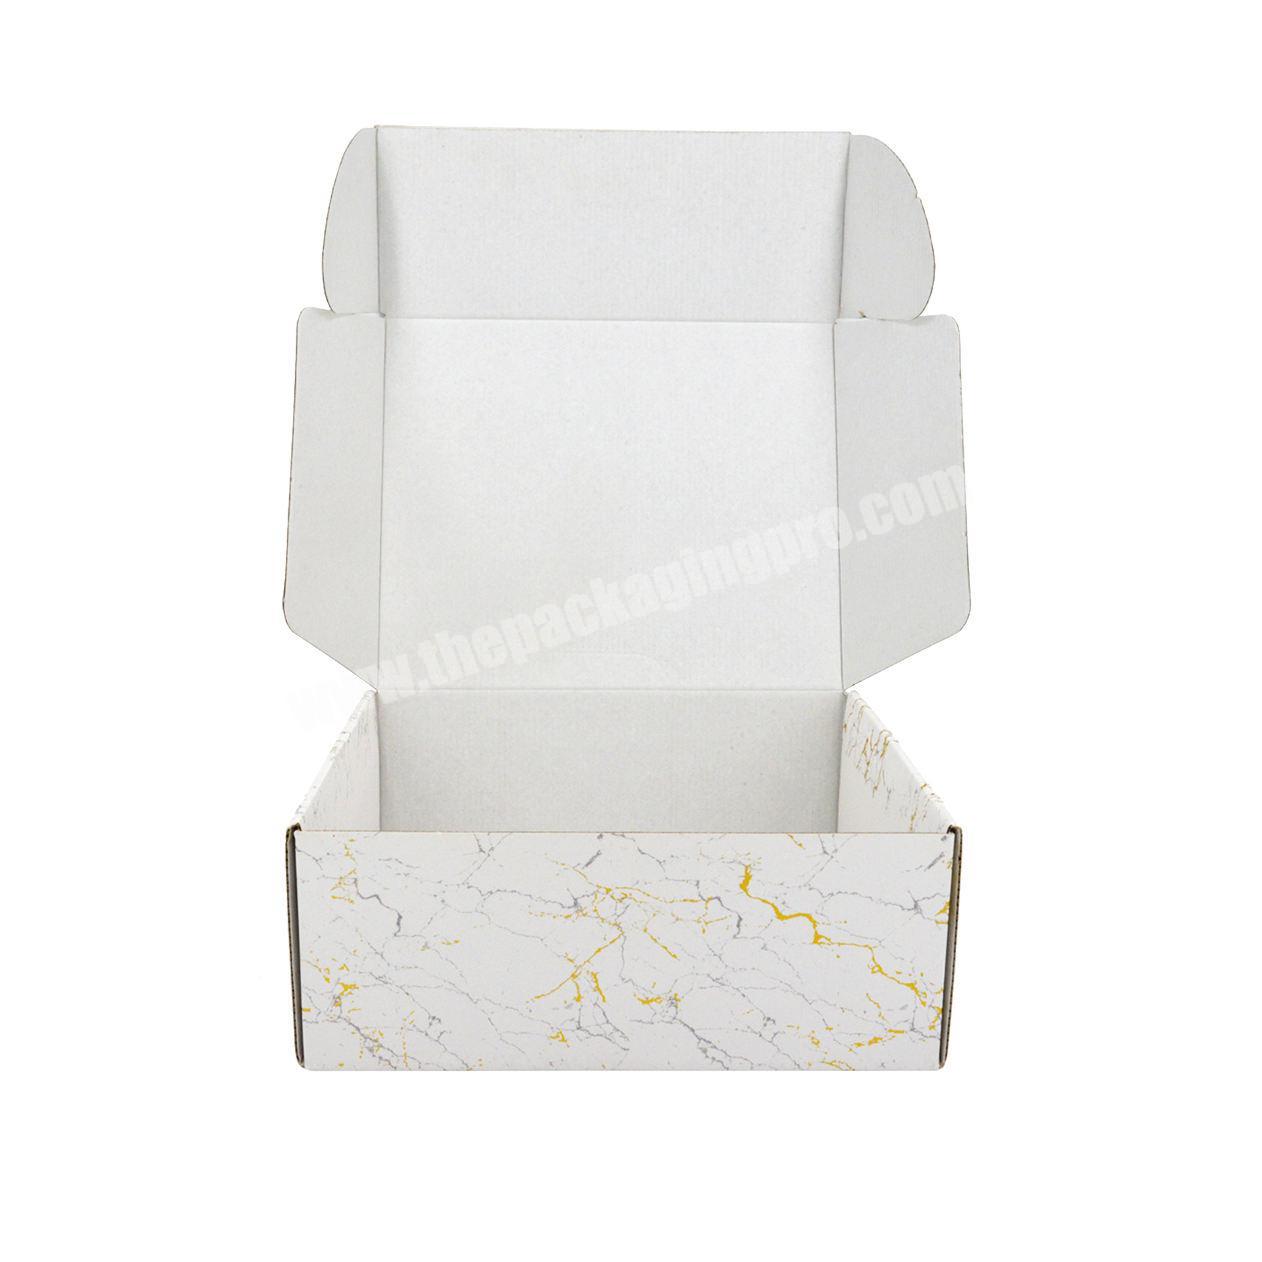 2022 Wholesale Customized Good Quality Corrugated White Foldable Paper Box